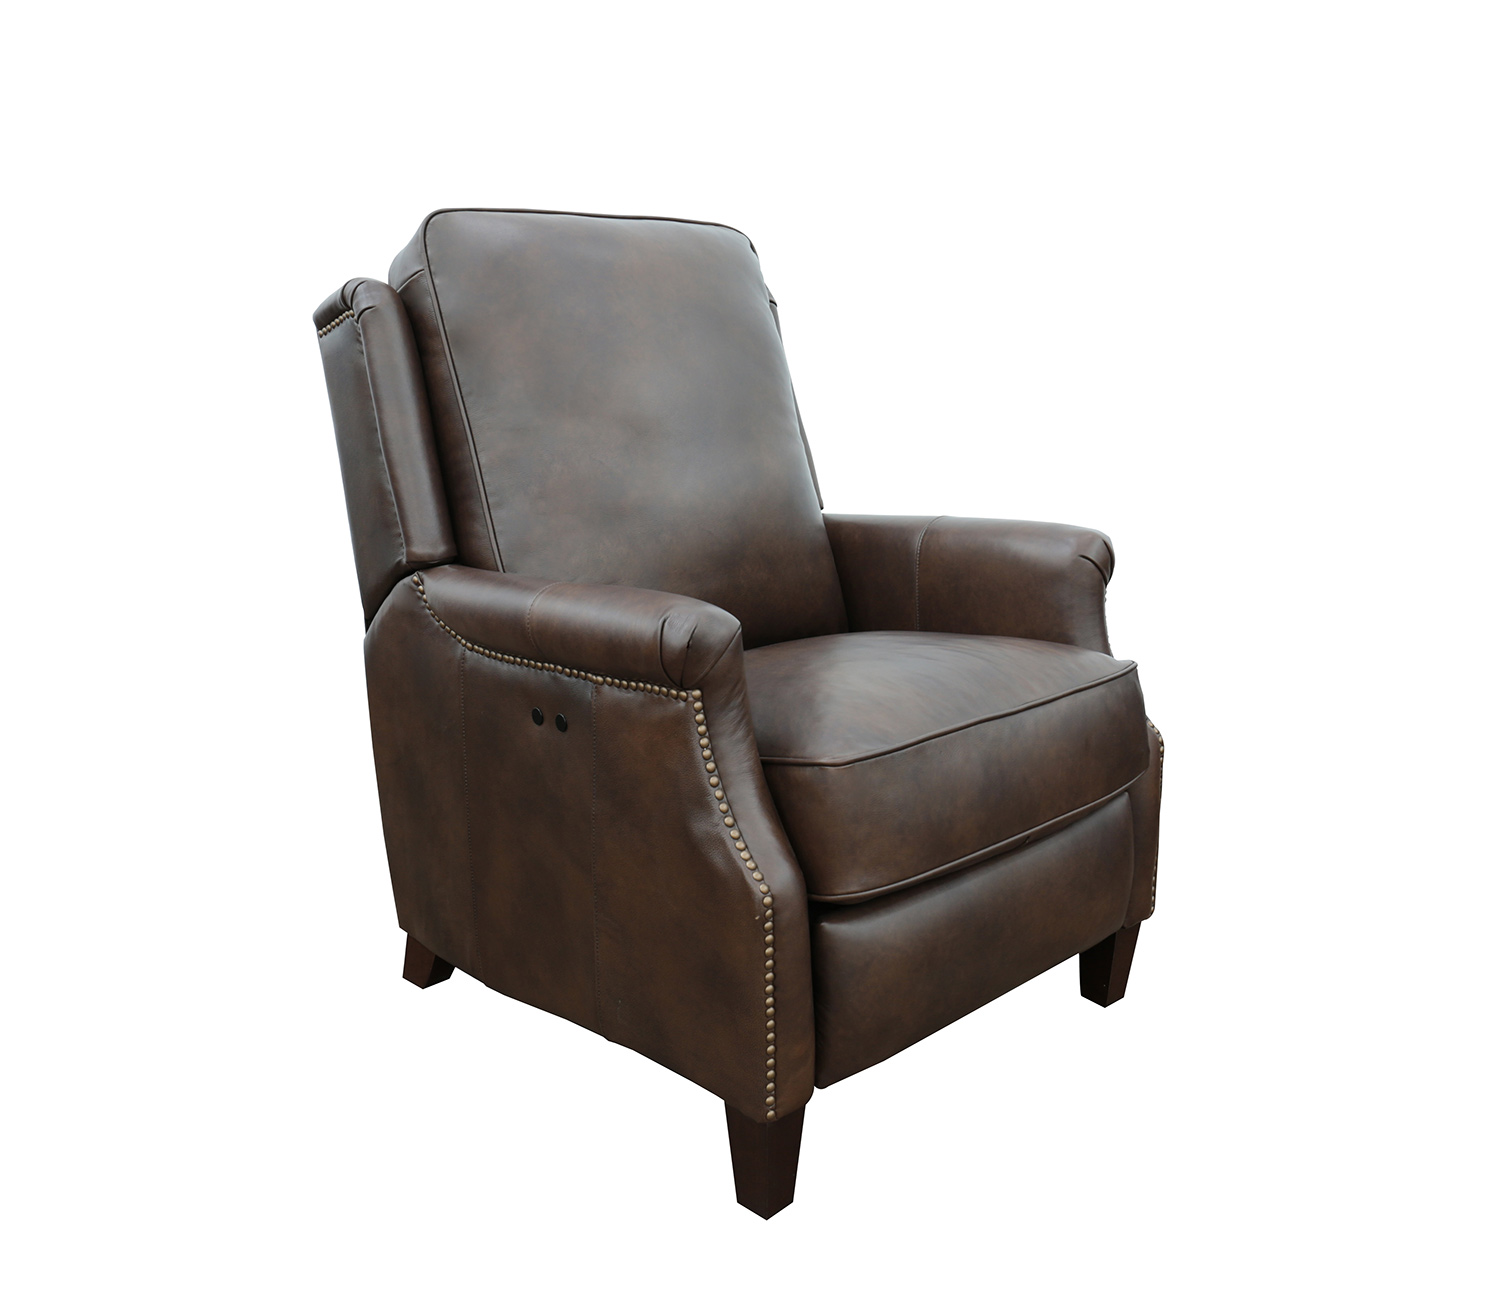 Barcalounger Riley Power Recliner Chair - Ashford Walnut/All Leather